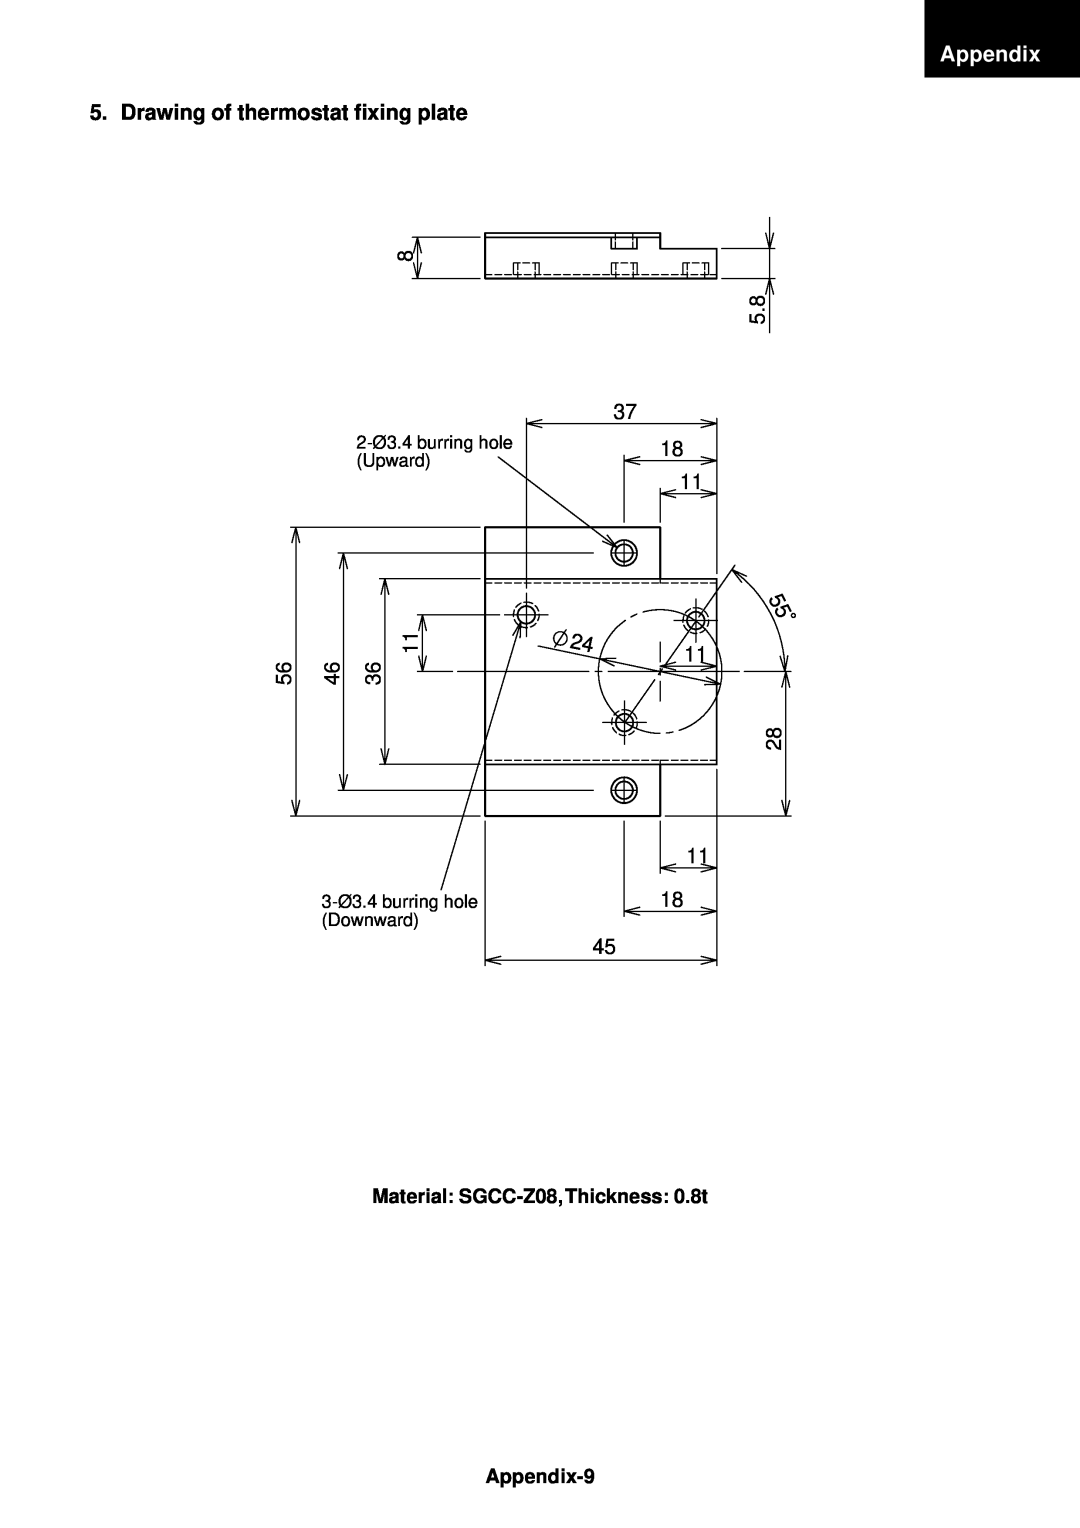 Toshiba RAS-B16GKVP-E, RAS-B13GKVP-E Drawing of thermostat fixing plate, Material SGCC-Z08, Thickness 0.8t, Appendix-9 